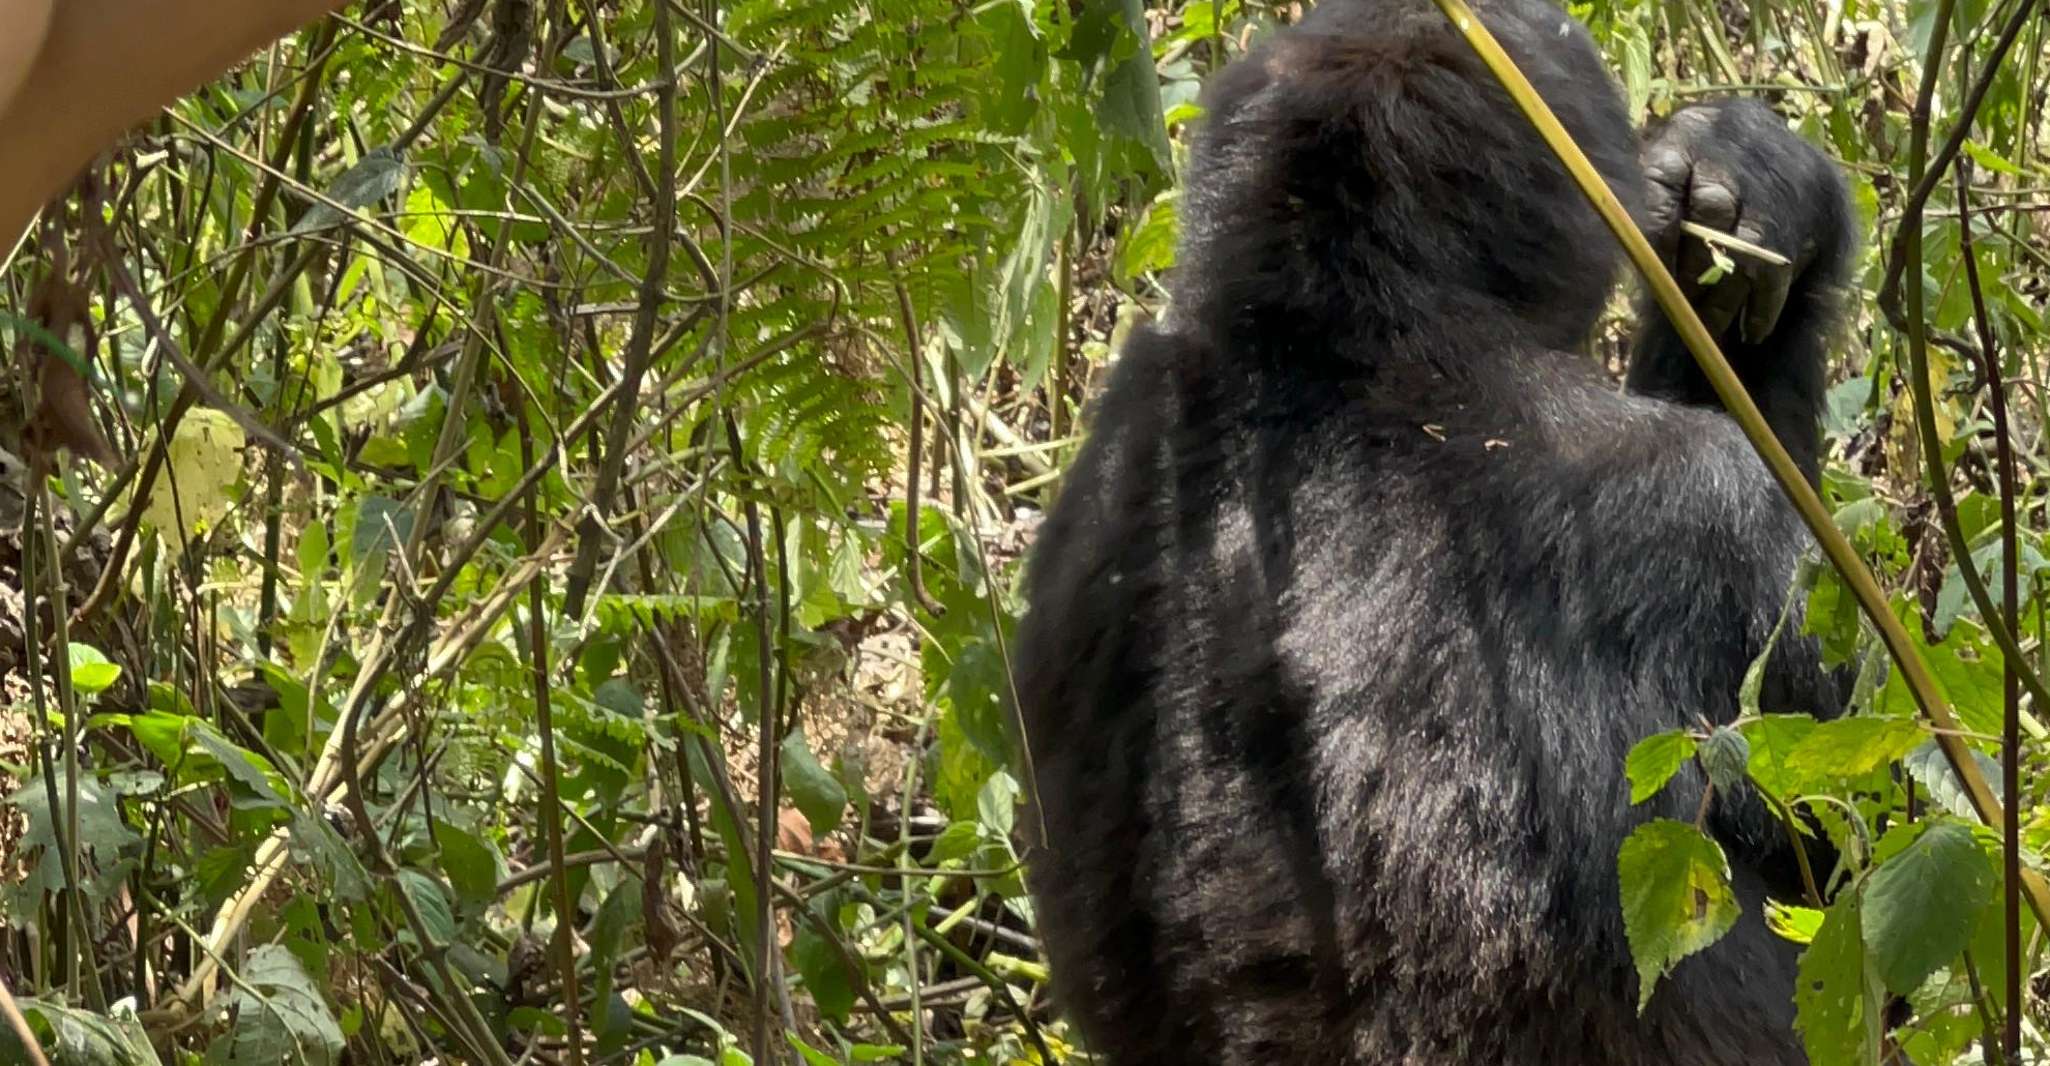 4 Day Congo (DRC) Lowland Gorilla Tracking from Kgl Rwanda - Housity